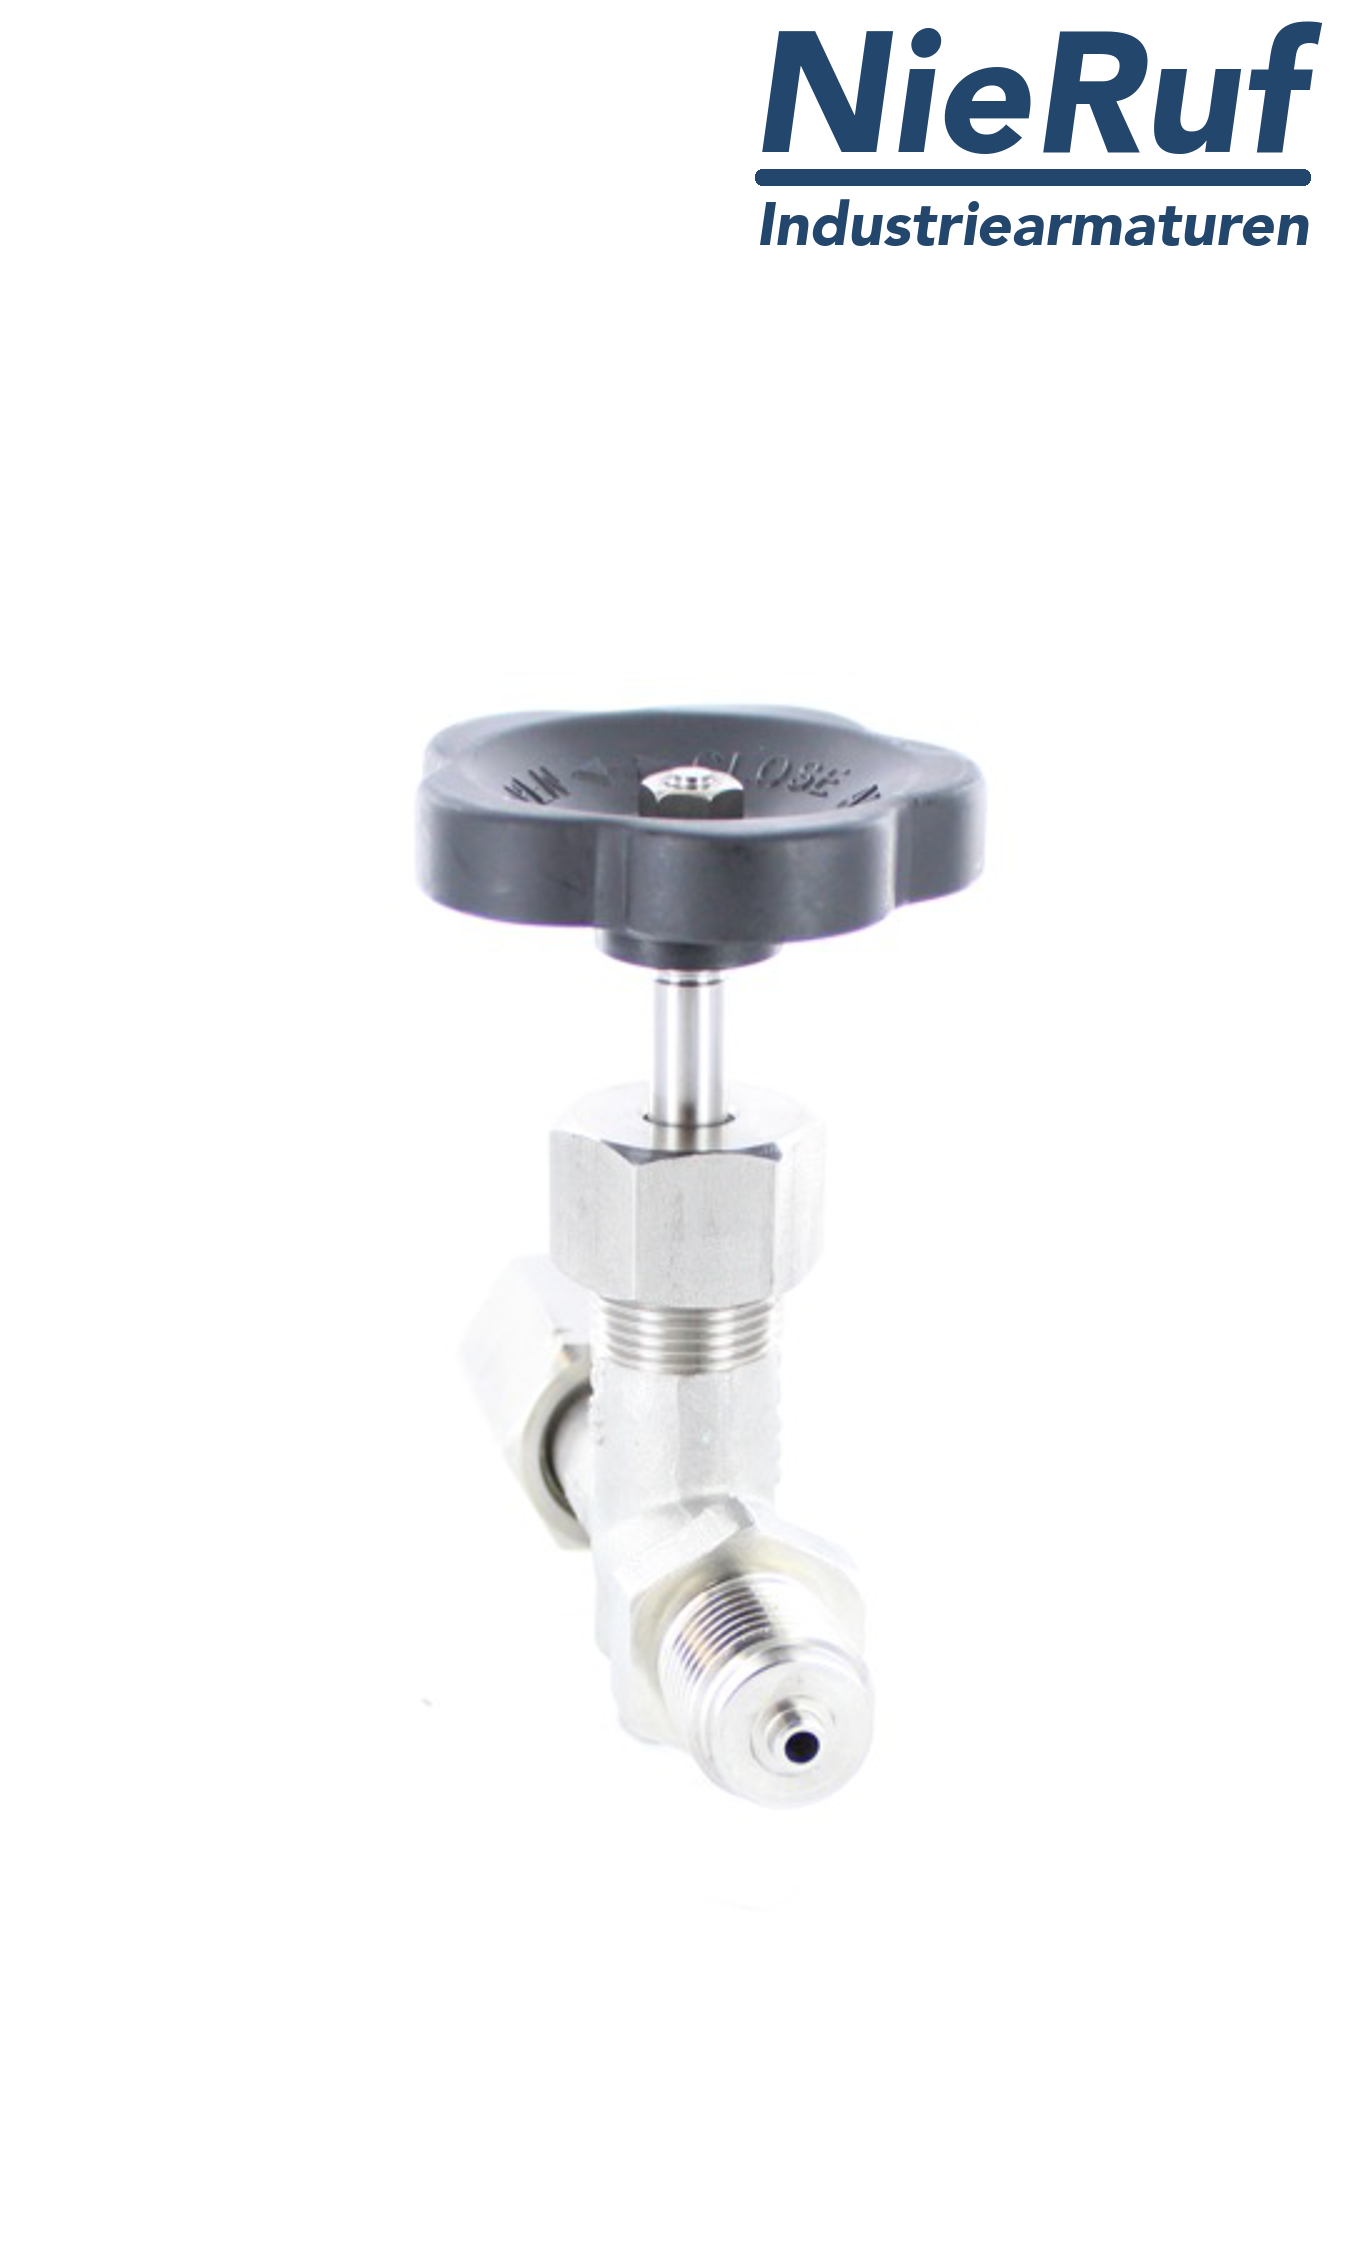 manometer gauge valves male thread x adapter for instrument holder with nut adjustable DIN 16270 stainless steel 1.4571 400 bar